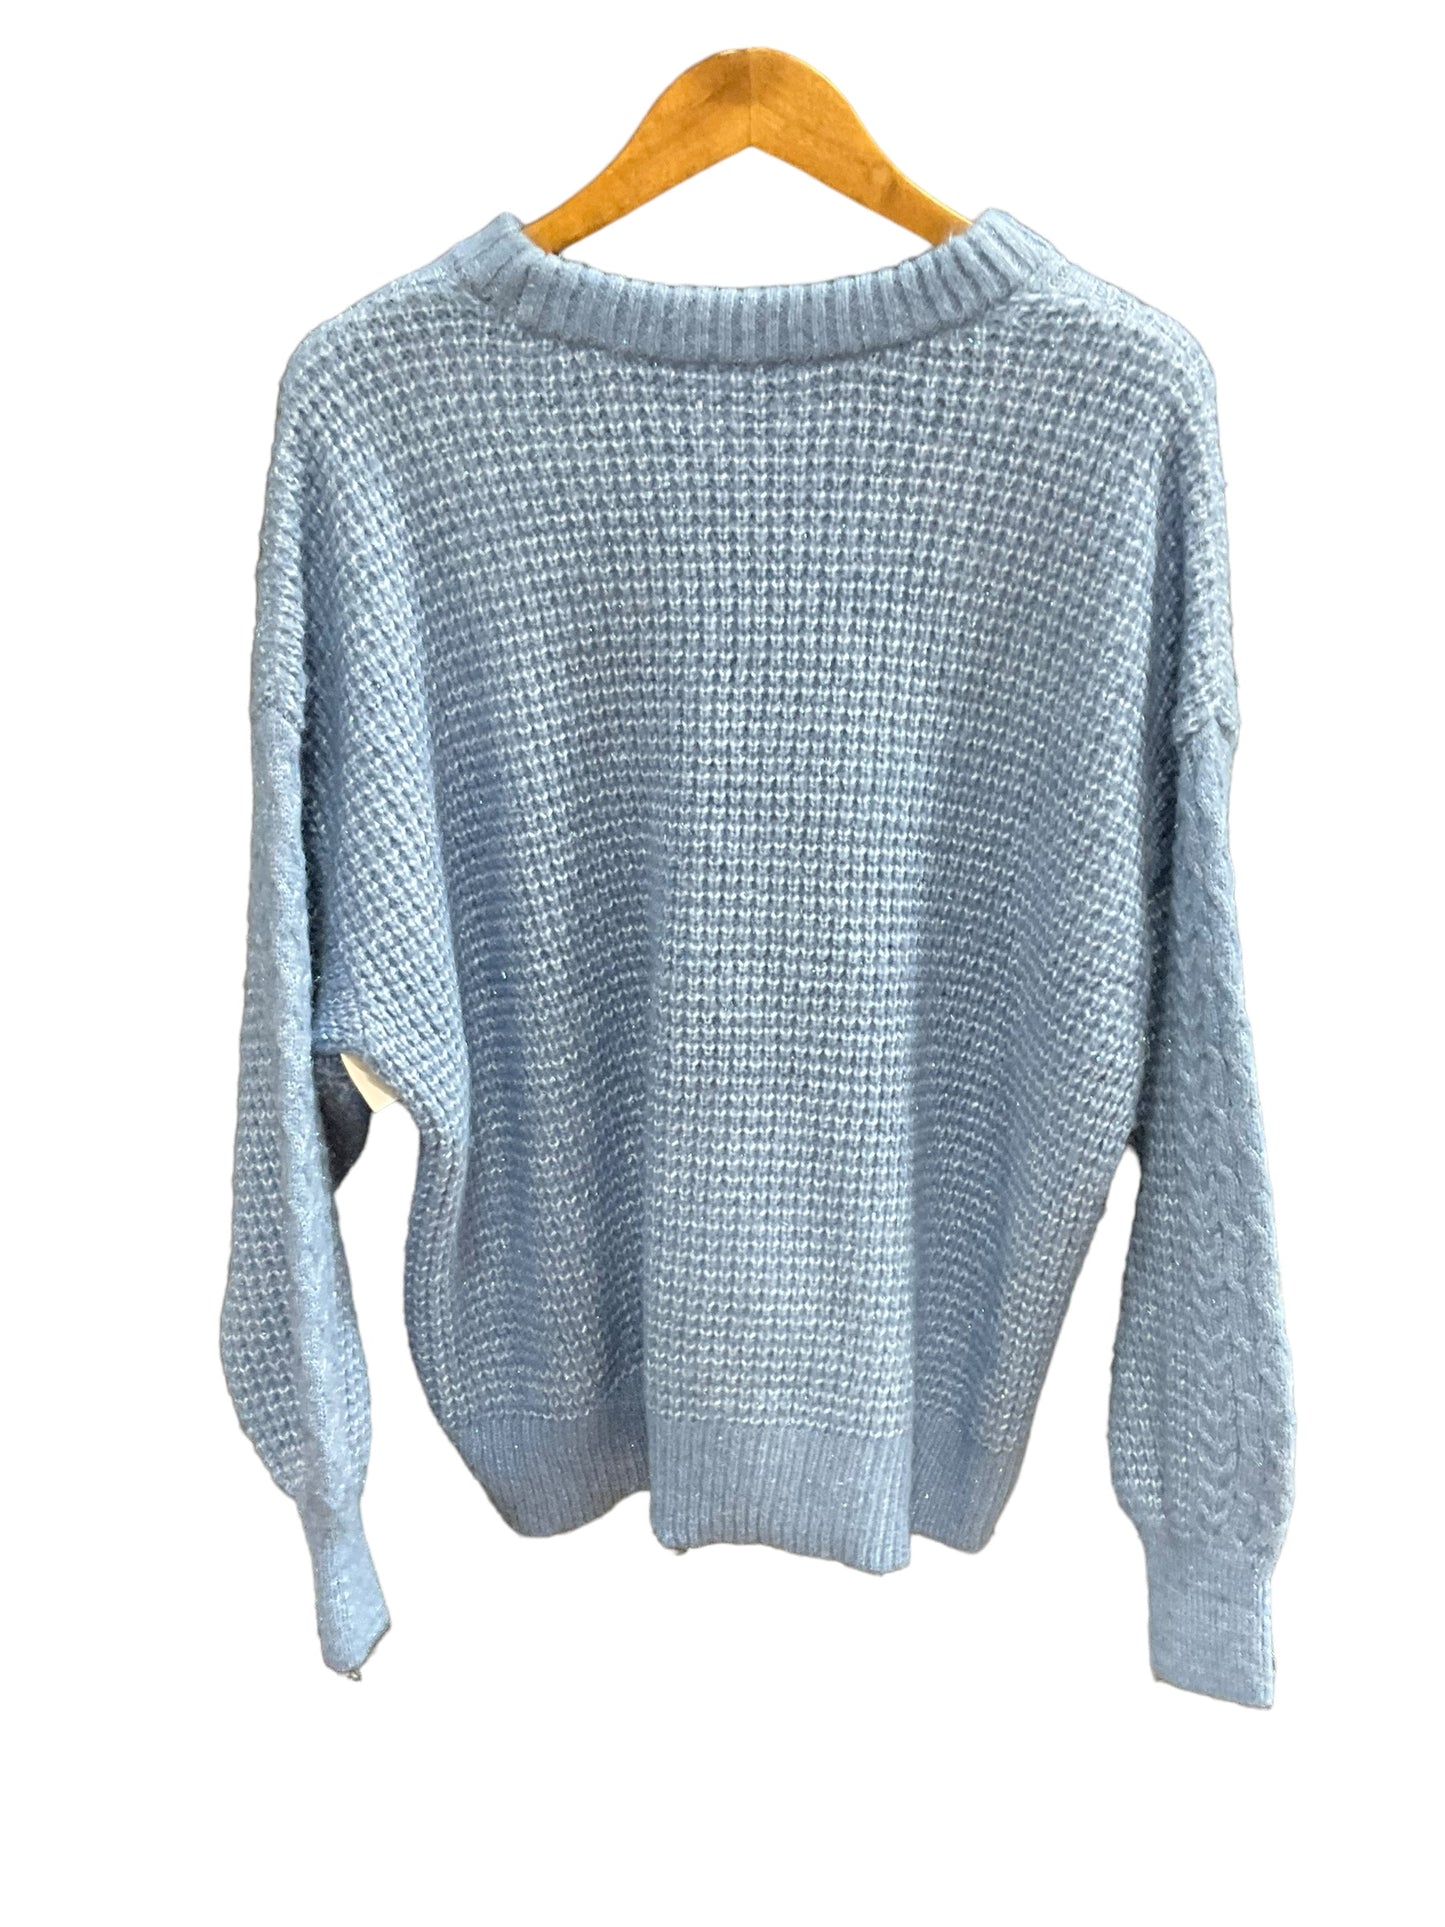 Sweater By Lc Lauren Conrad  Size: Xxl